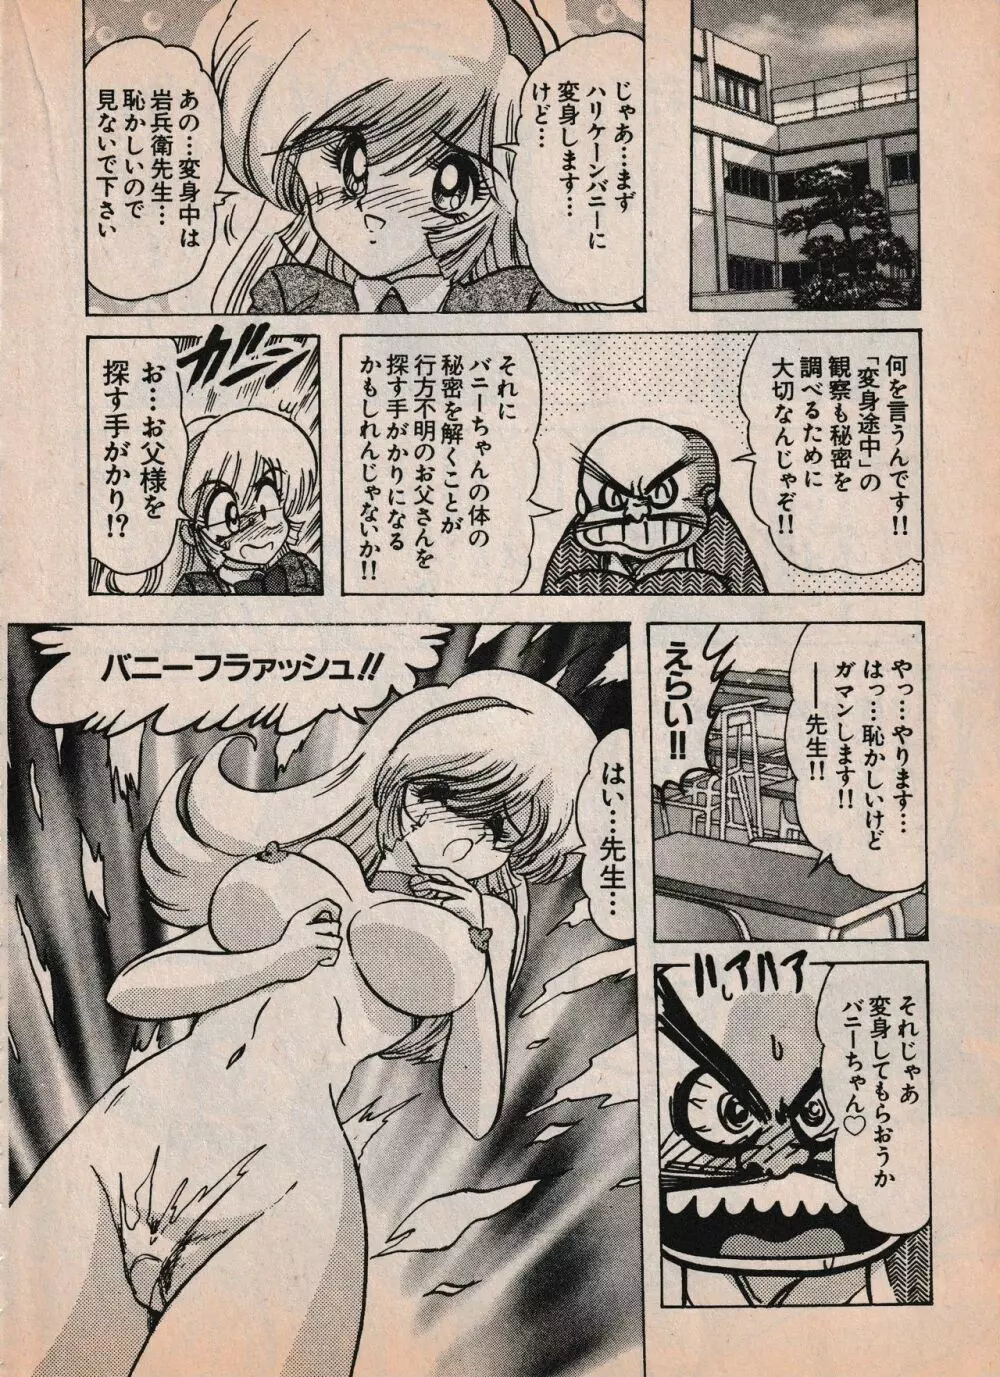 Sailor X vol. 4 - Sailor X vs. Cunty Horny! Page.19